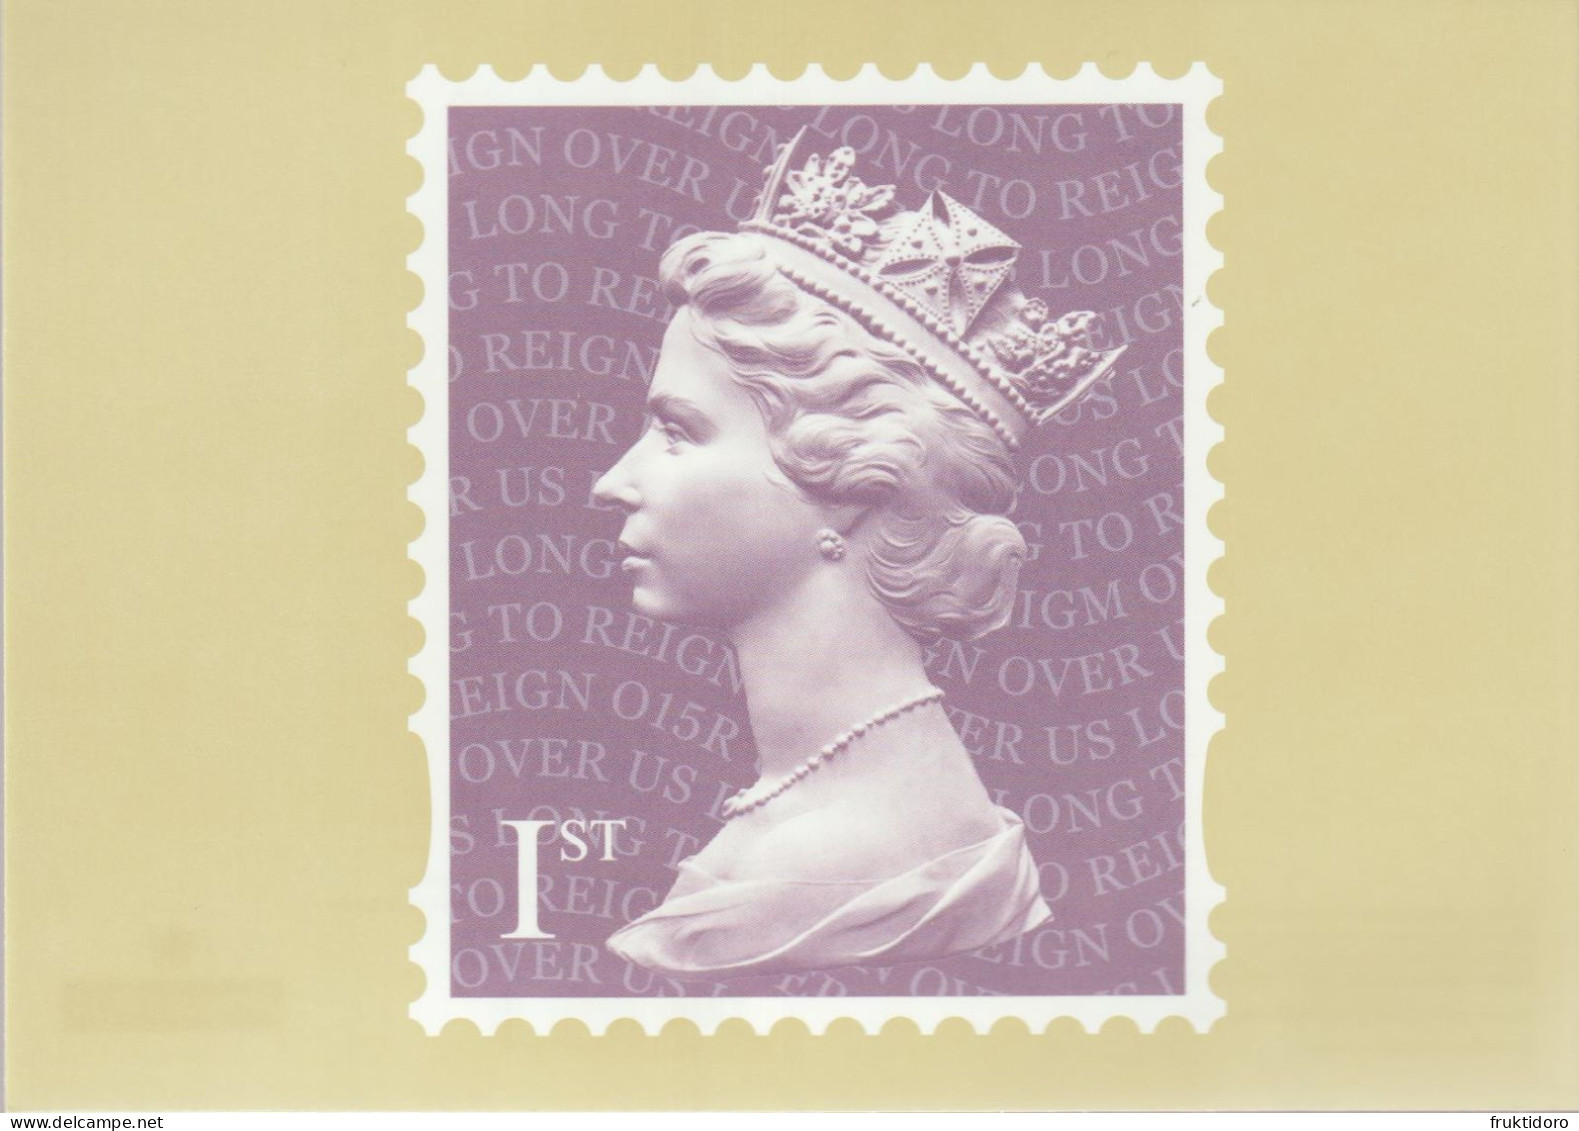 United Kingdom Postcards 2015 About Stamps In Mi Block 96 Queen Elizabeth II - Long To Reign Over Us ** - Sammlungen